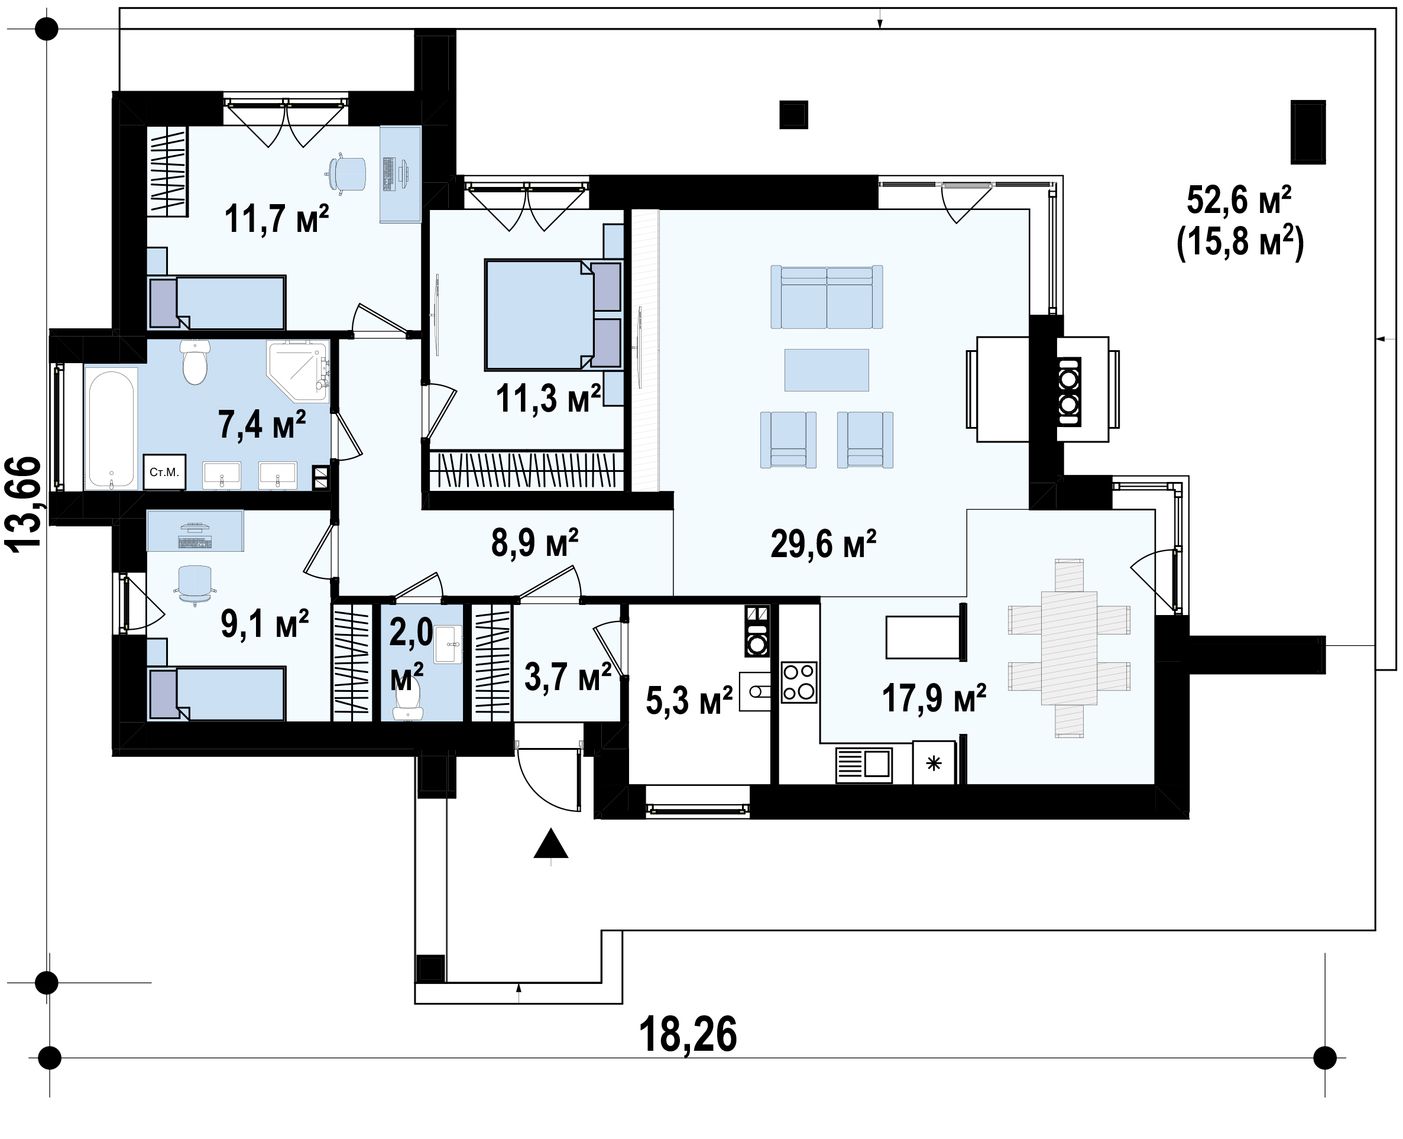 1-ый этаж - план проекта Zx65